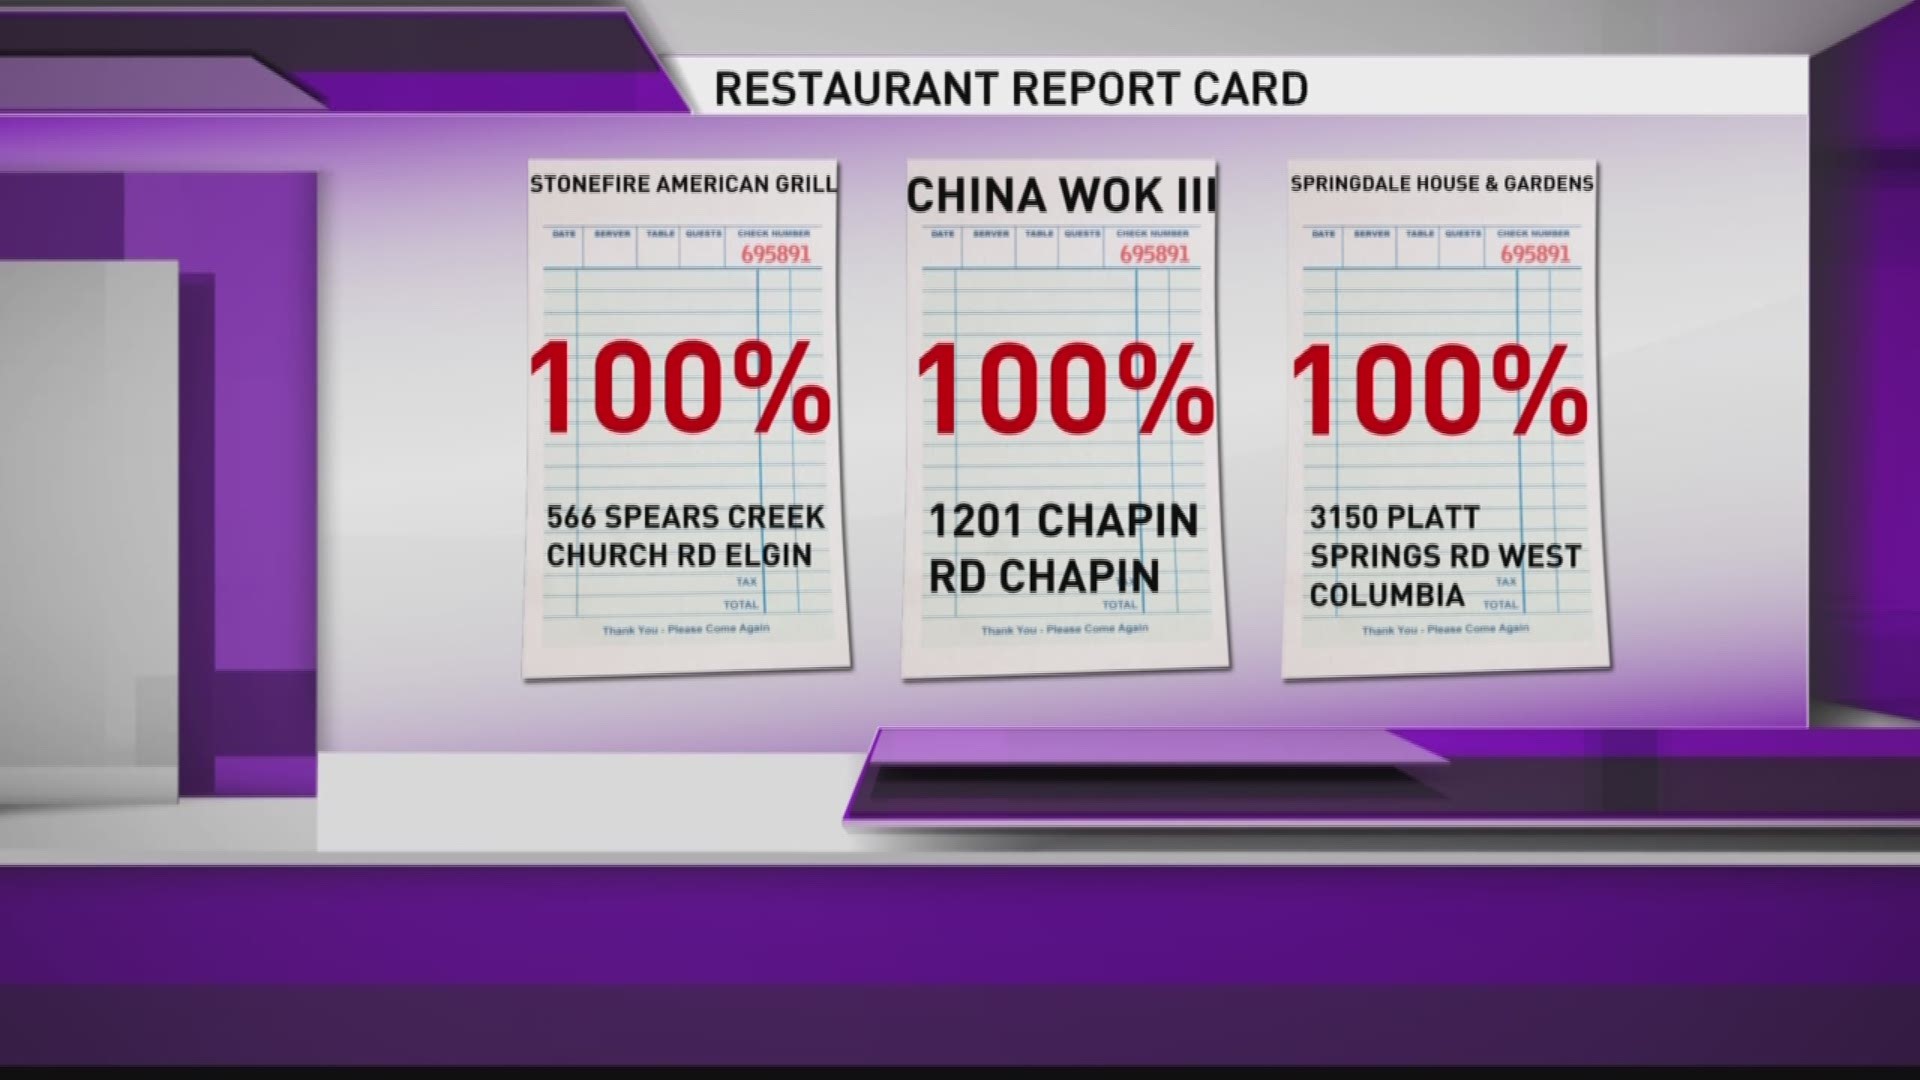 Restaurant Report Card Lake Murray Deli & Bar, Chen's Chinese